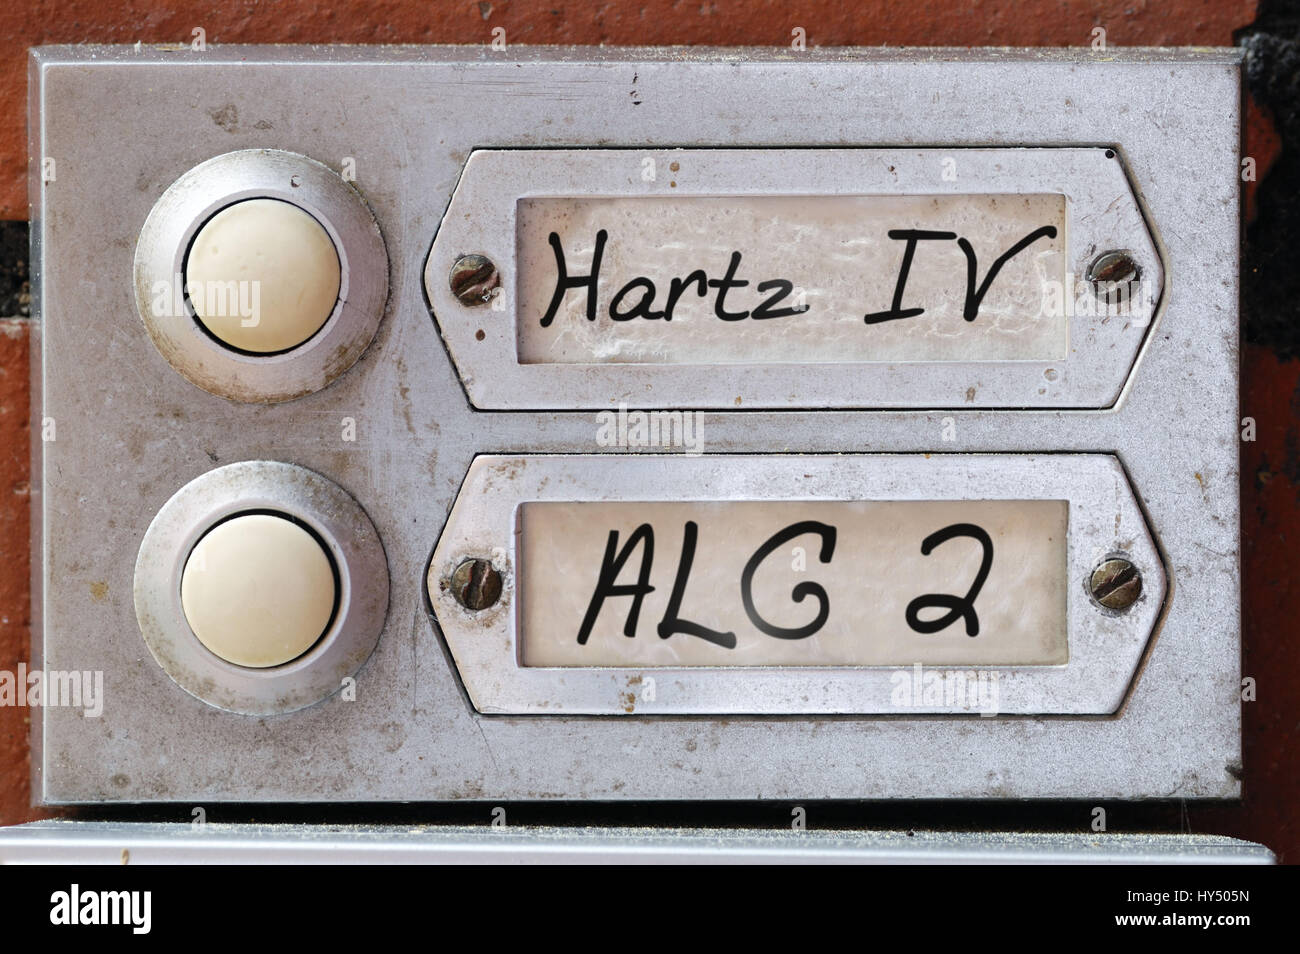 Señal de campana con la etiqueta Hartz IV y ALG 2, mit der Aufschrift Klingelschild Hartz IV und ALG 2 Foto de stock